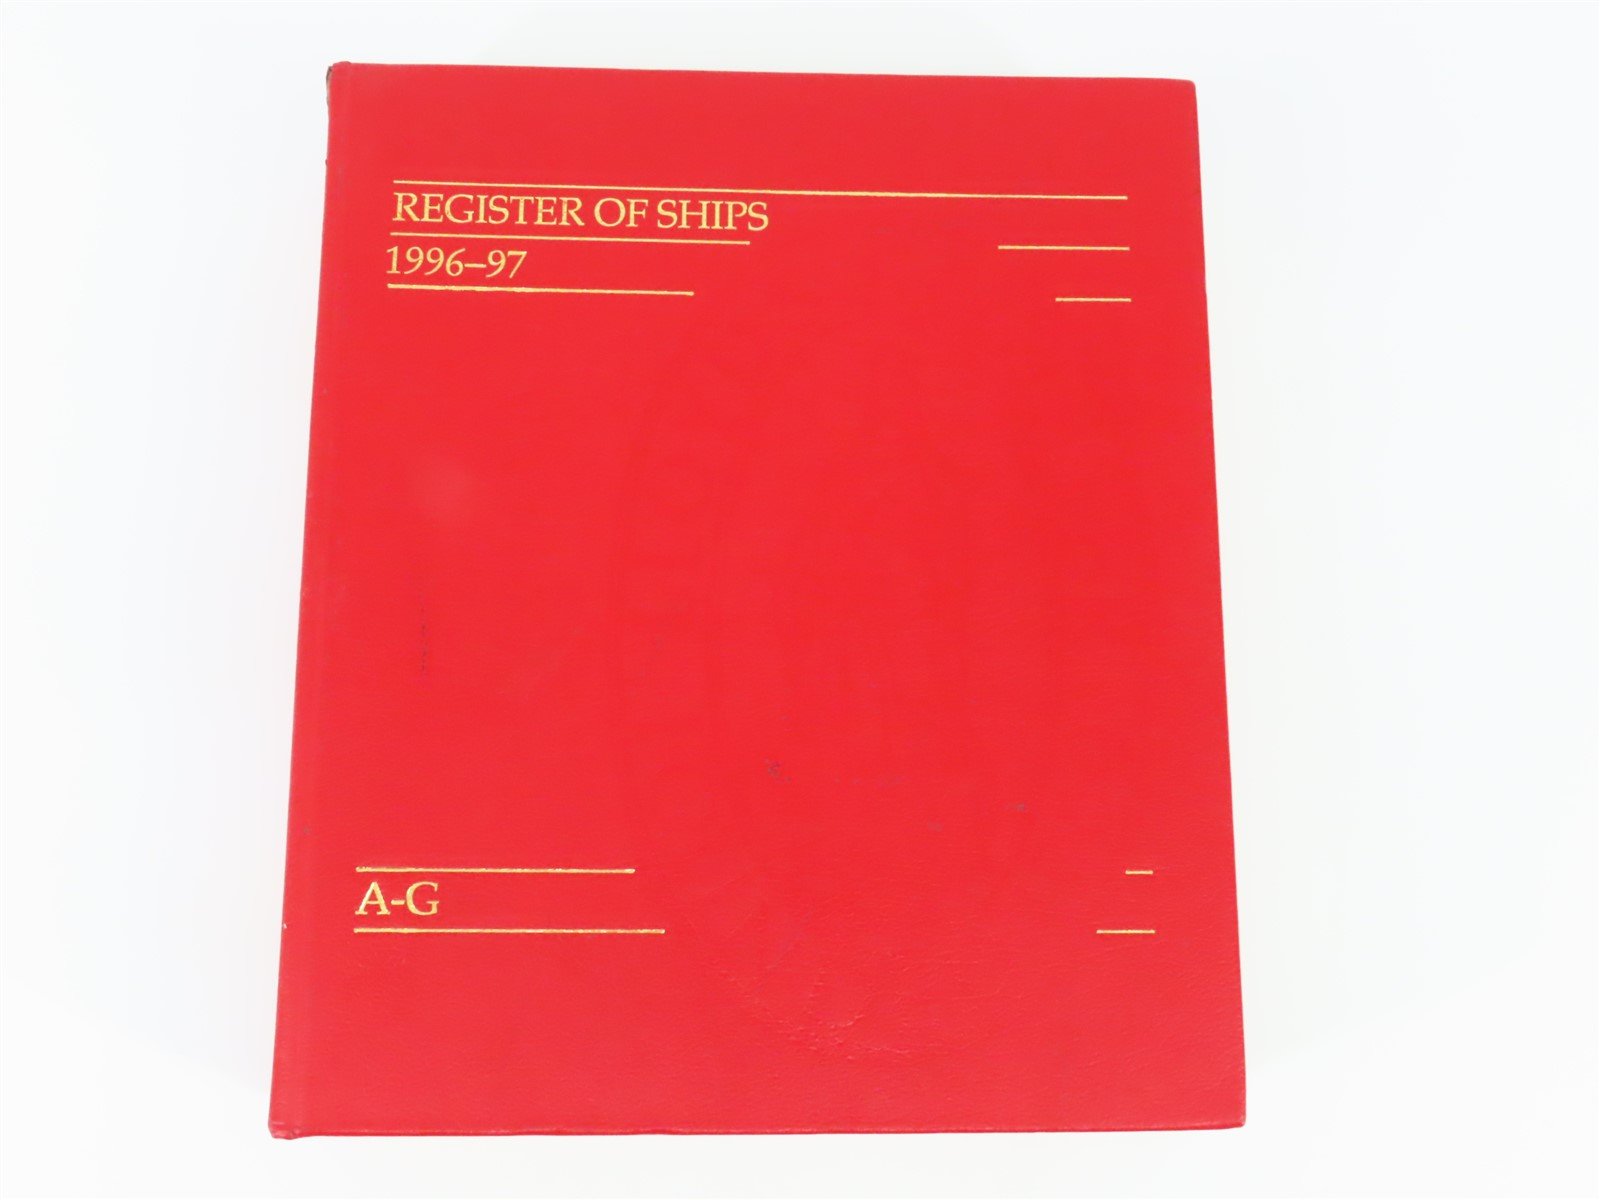 Lloyd's Register of Ships 1996-97 A-G ©1996 HC Book